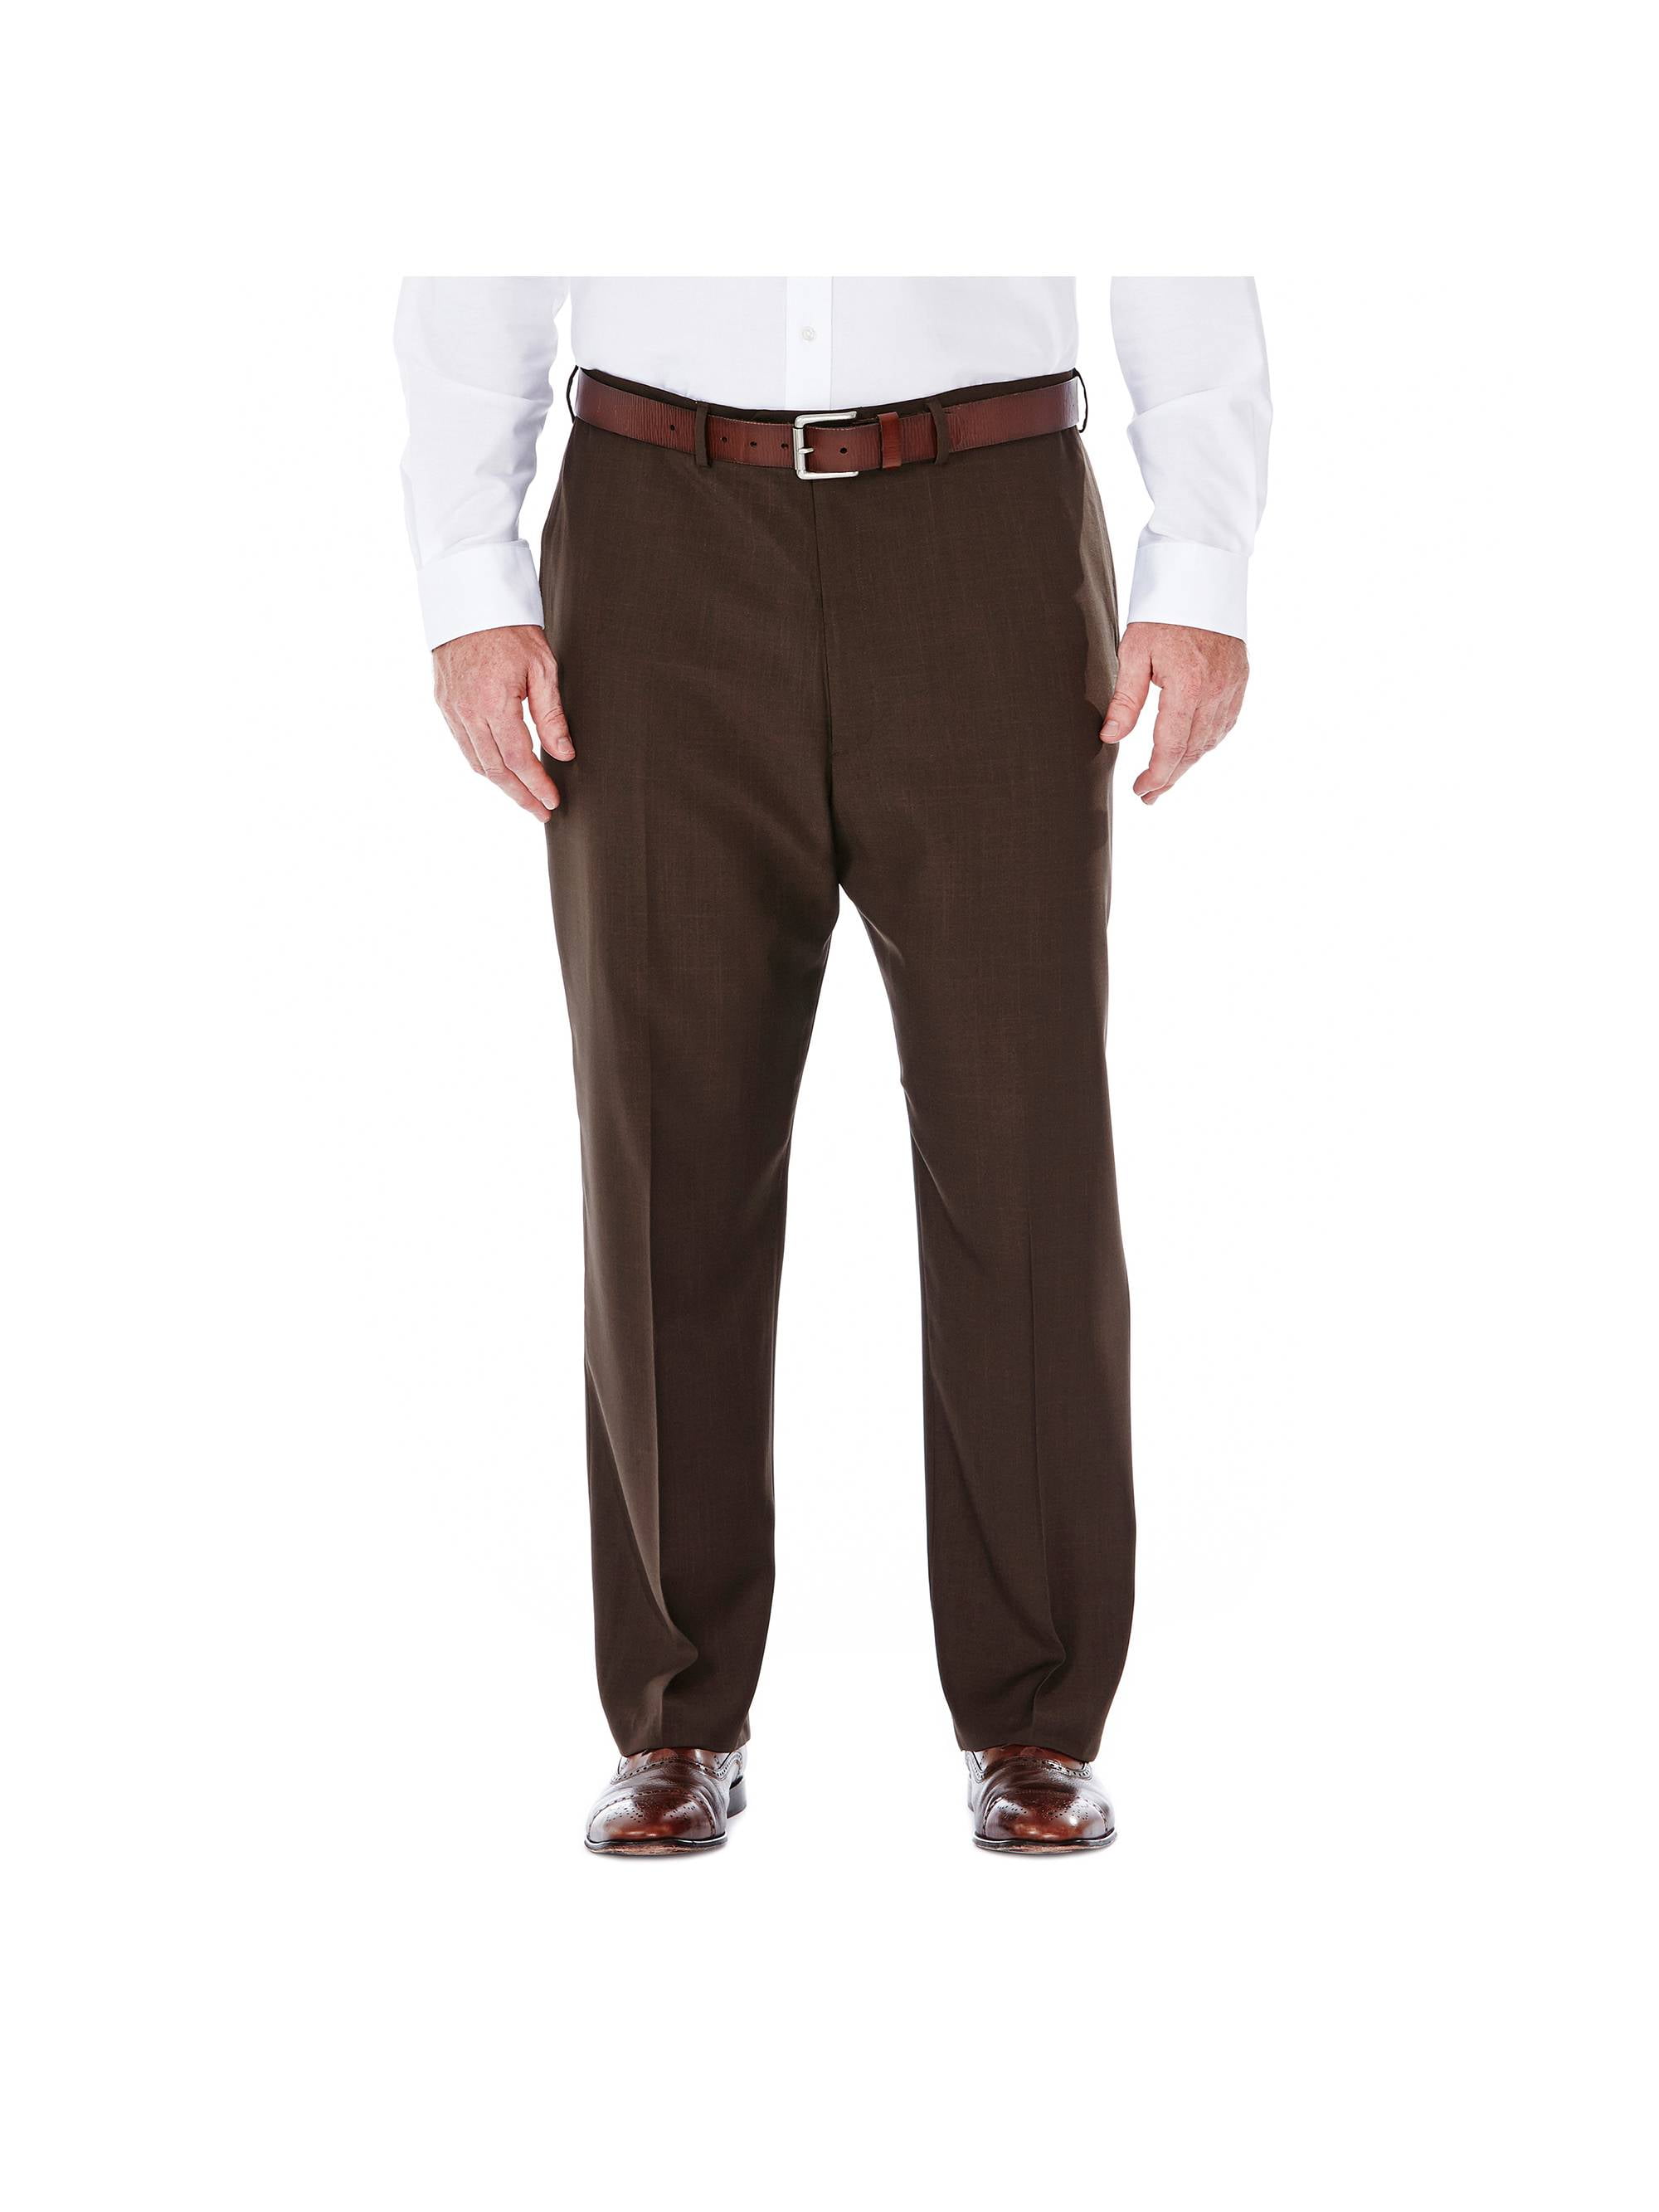 NWT DOCKERS Big & Tall Signature Khaki in Khaki Beige Trouser Pants 50 x 30 